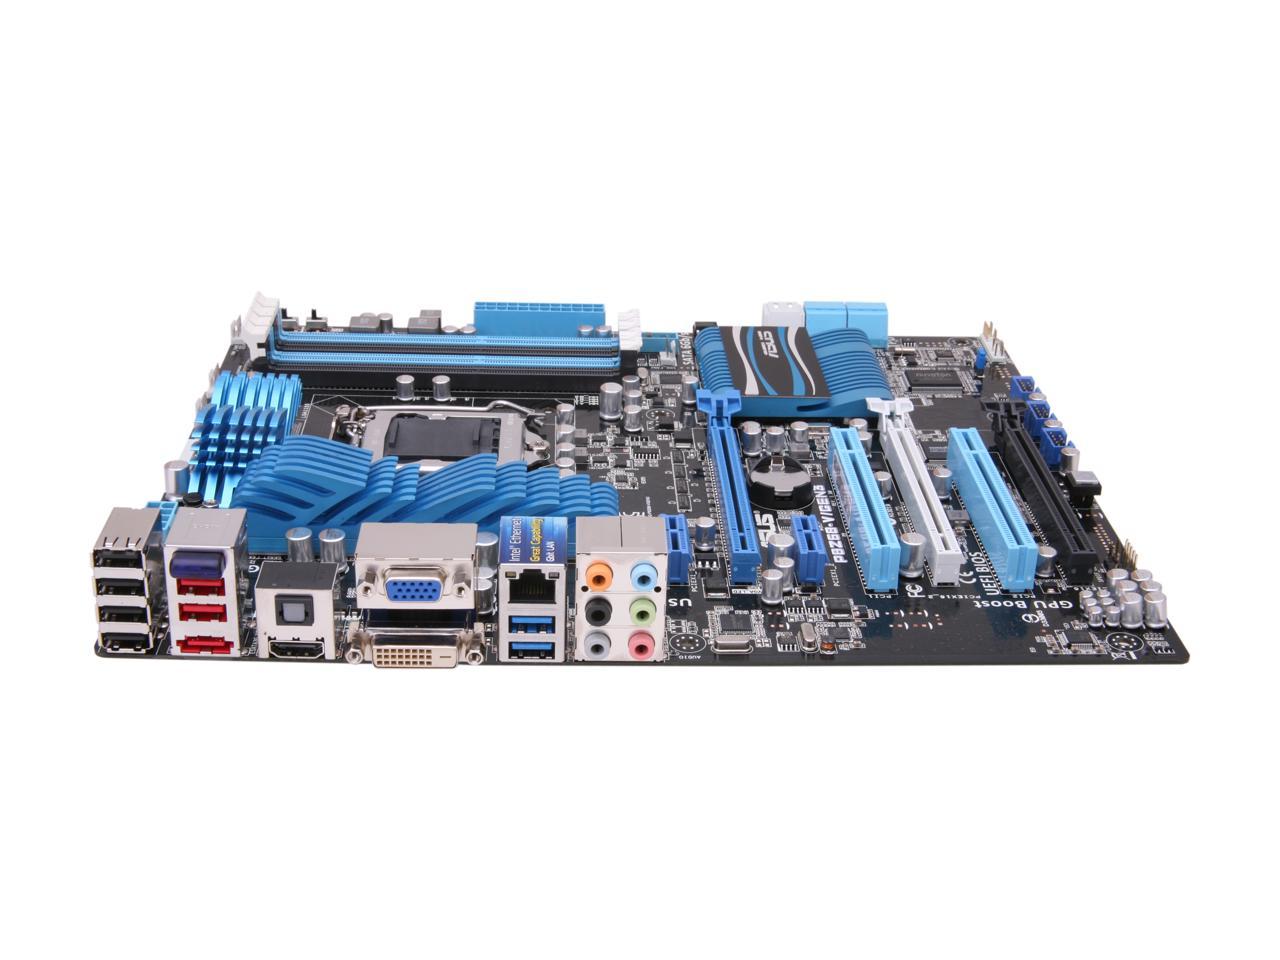 ASUS P8Z68-V/GEN3 LGA 1155 Intel Z68 HDMI SATA 6Gb/s USB 3.0 ATX Intel Motherboard with UEFI BIOS